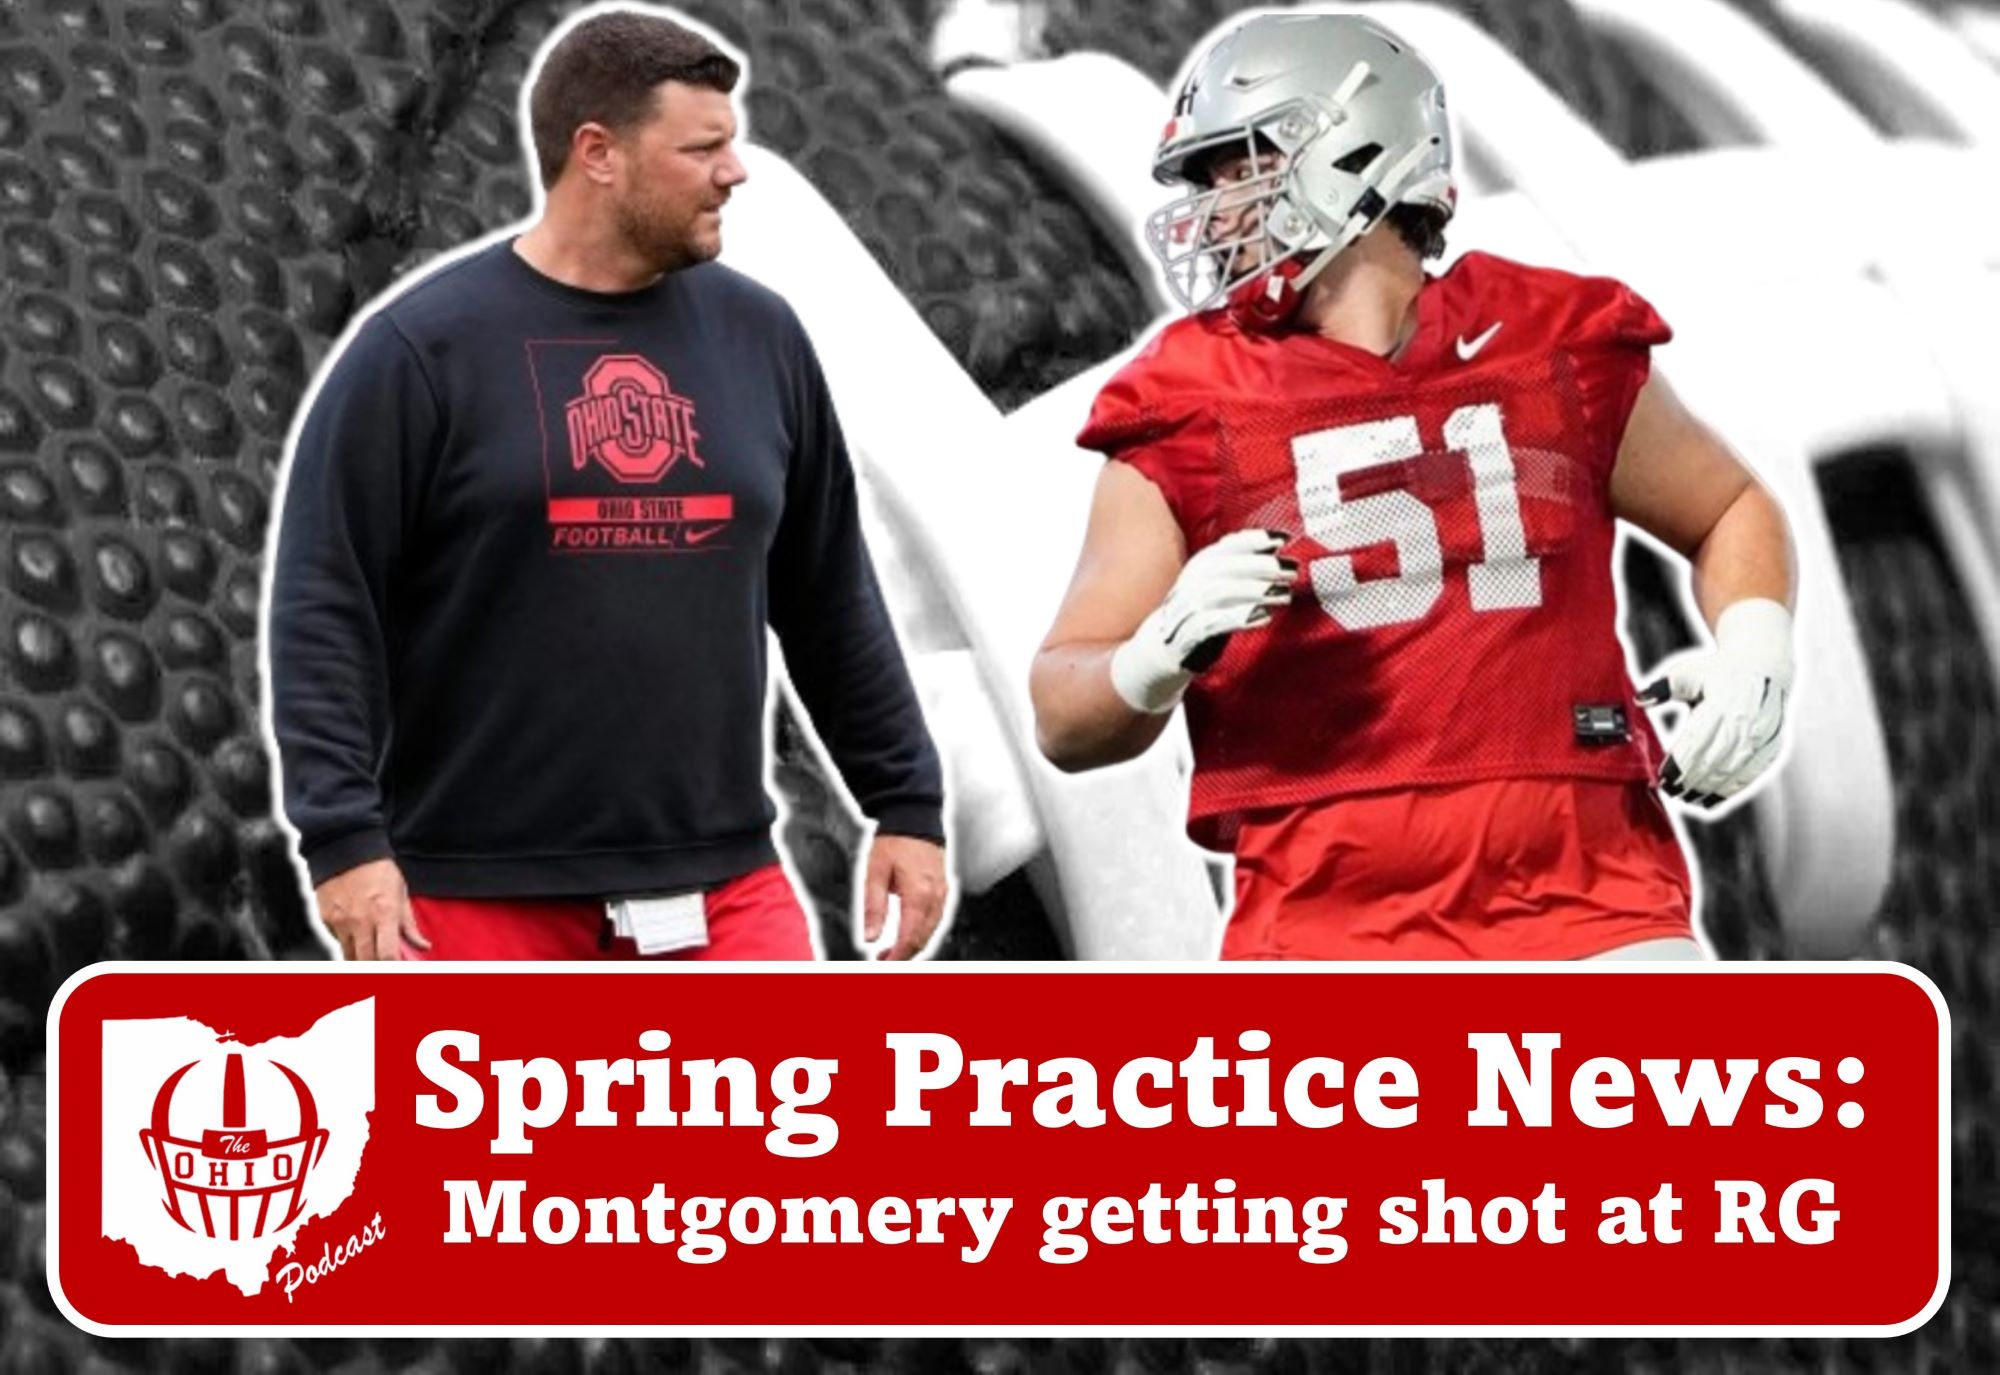 Spring Practice News: Luke Montgomery